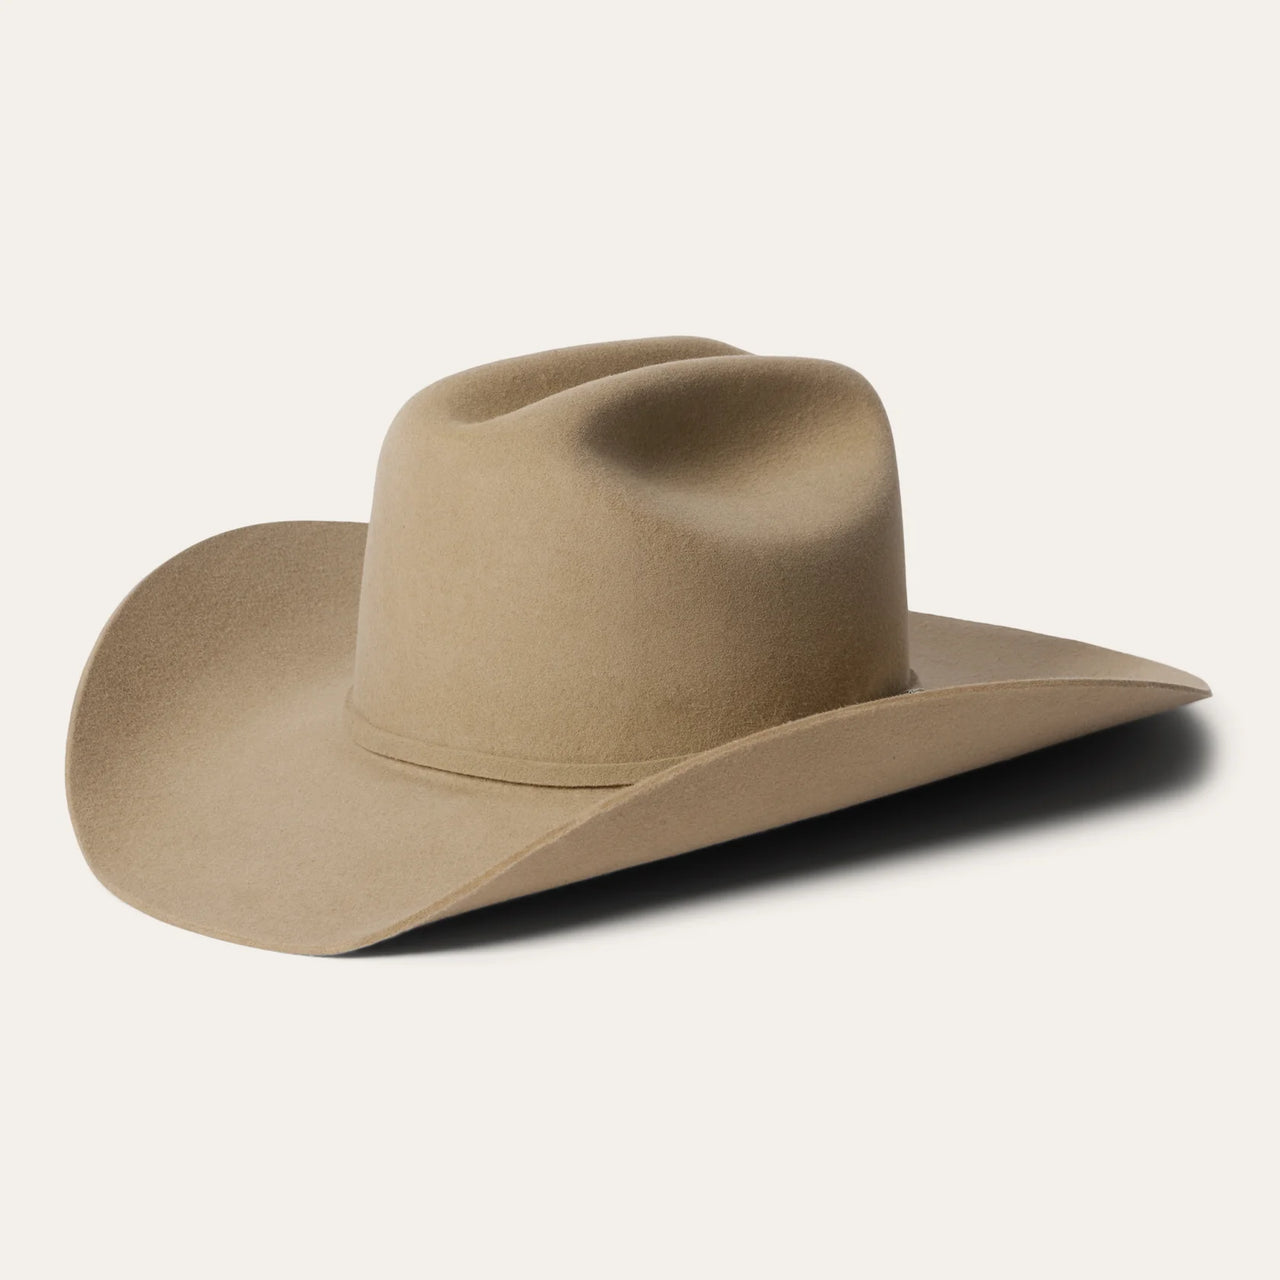 Stetson Corral 4X Felt Cowboy Hat